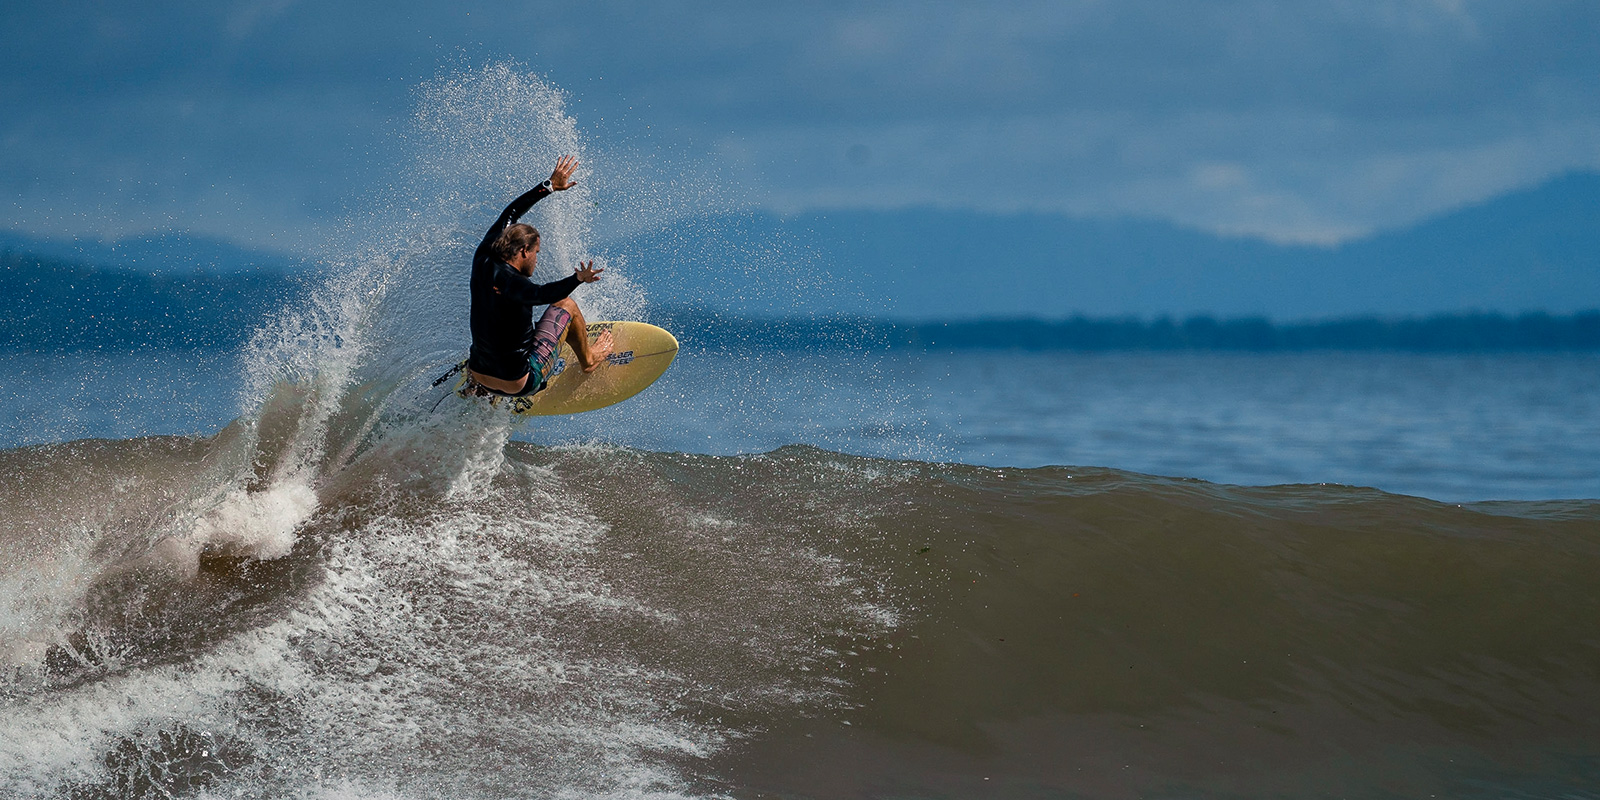 Marlon Lipkes Boardbag: Surfequipment für den perfekten Wellenritt